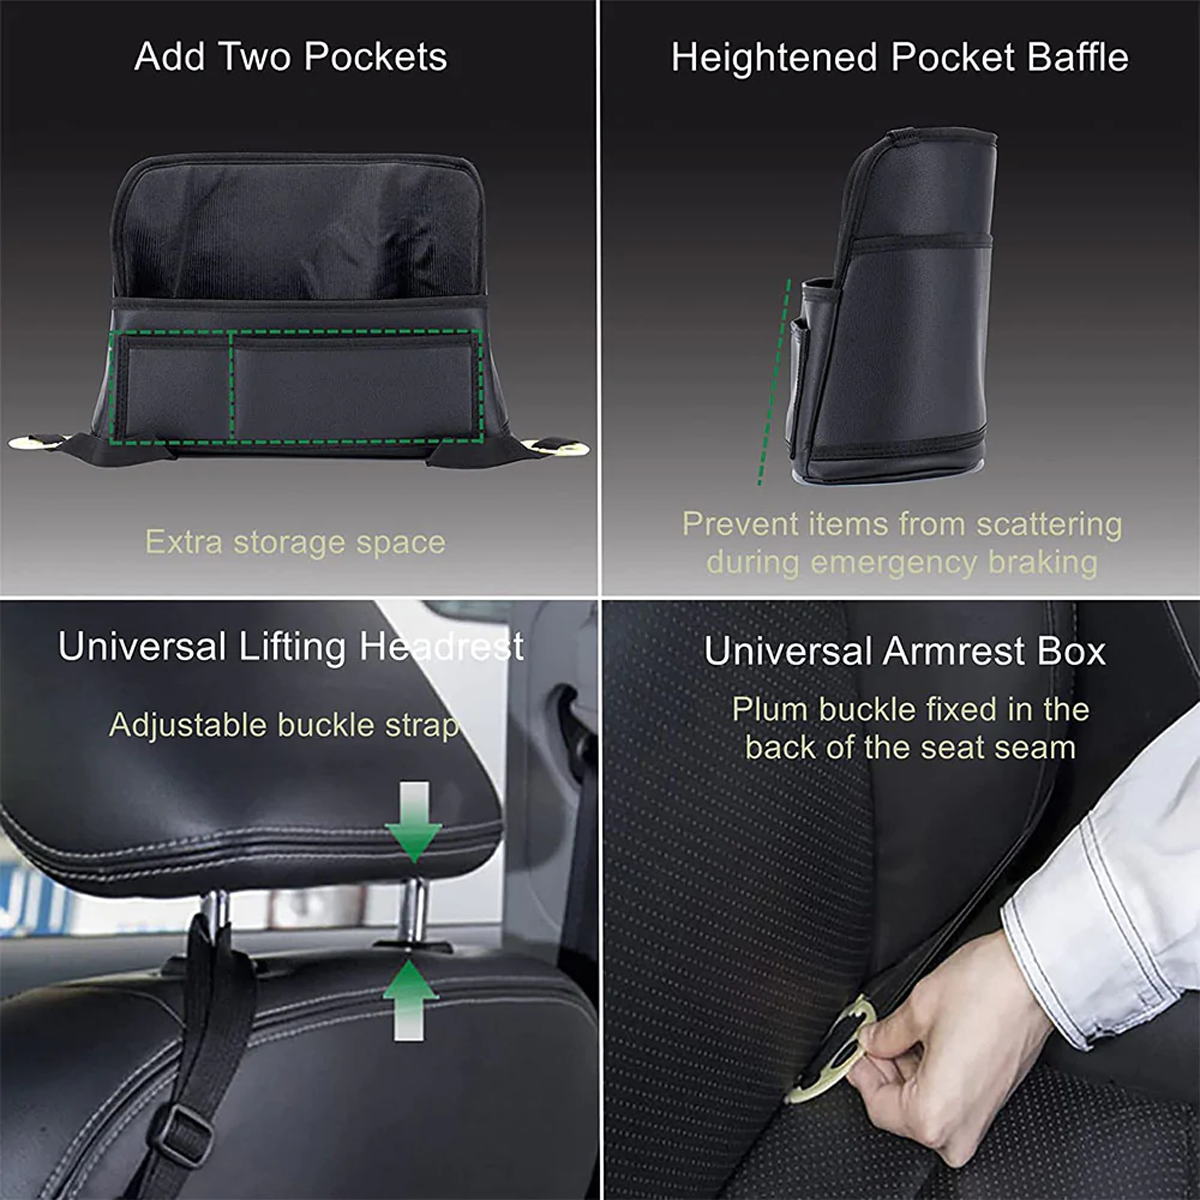 Car Purse Holder for Car Handbag Holder Between Seats Premium PU Leather, Custom Fit For Car, Hanging Car Purse Storage Pocket Back Seat Pet Barrier DLMC223